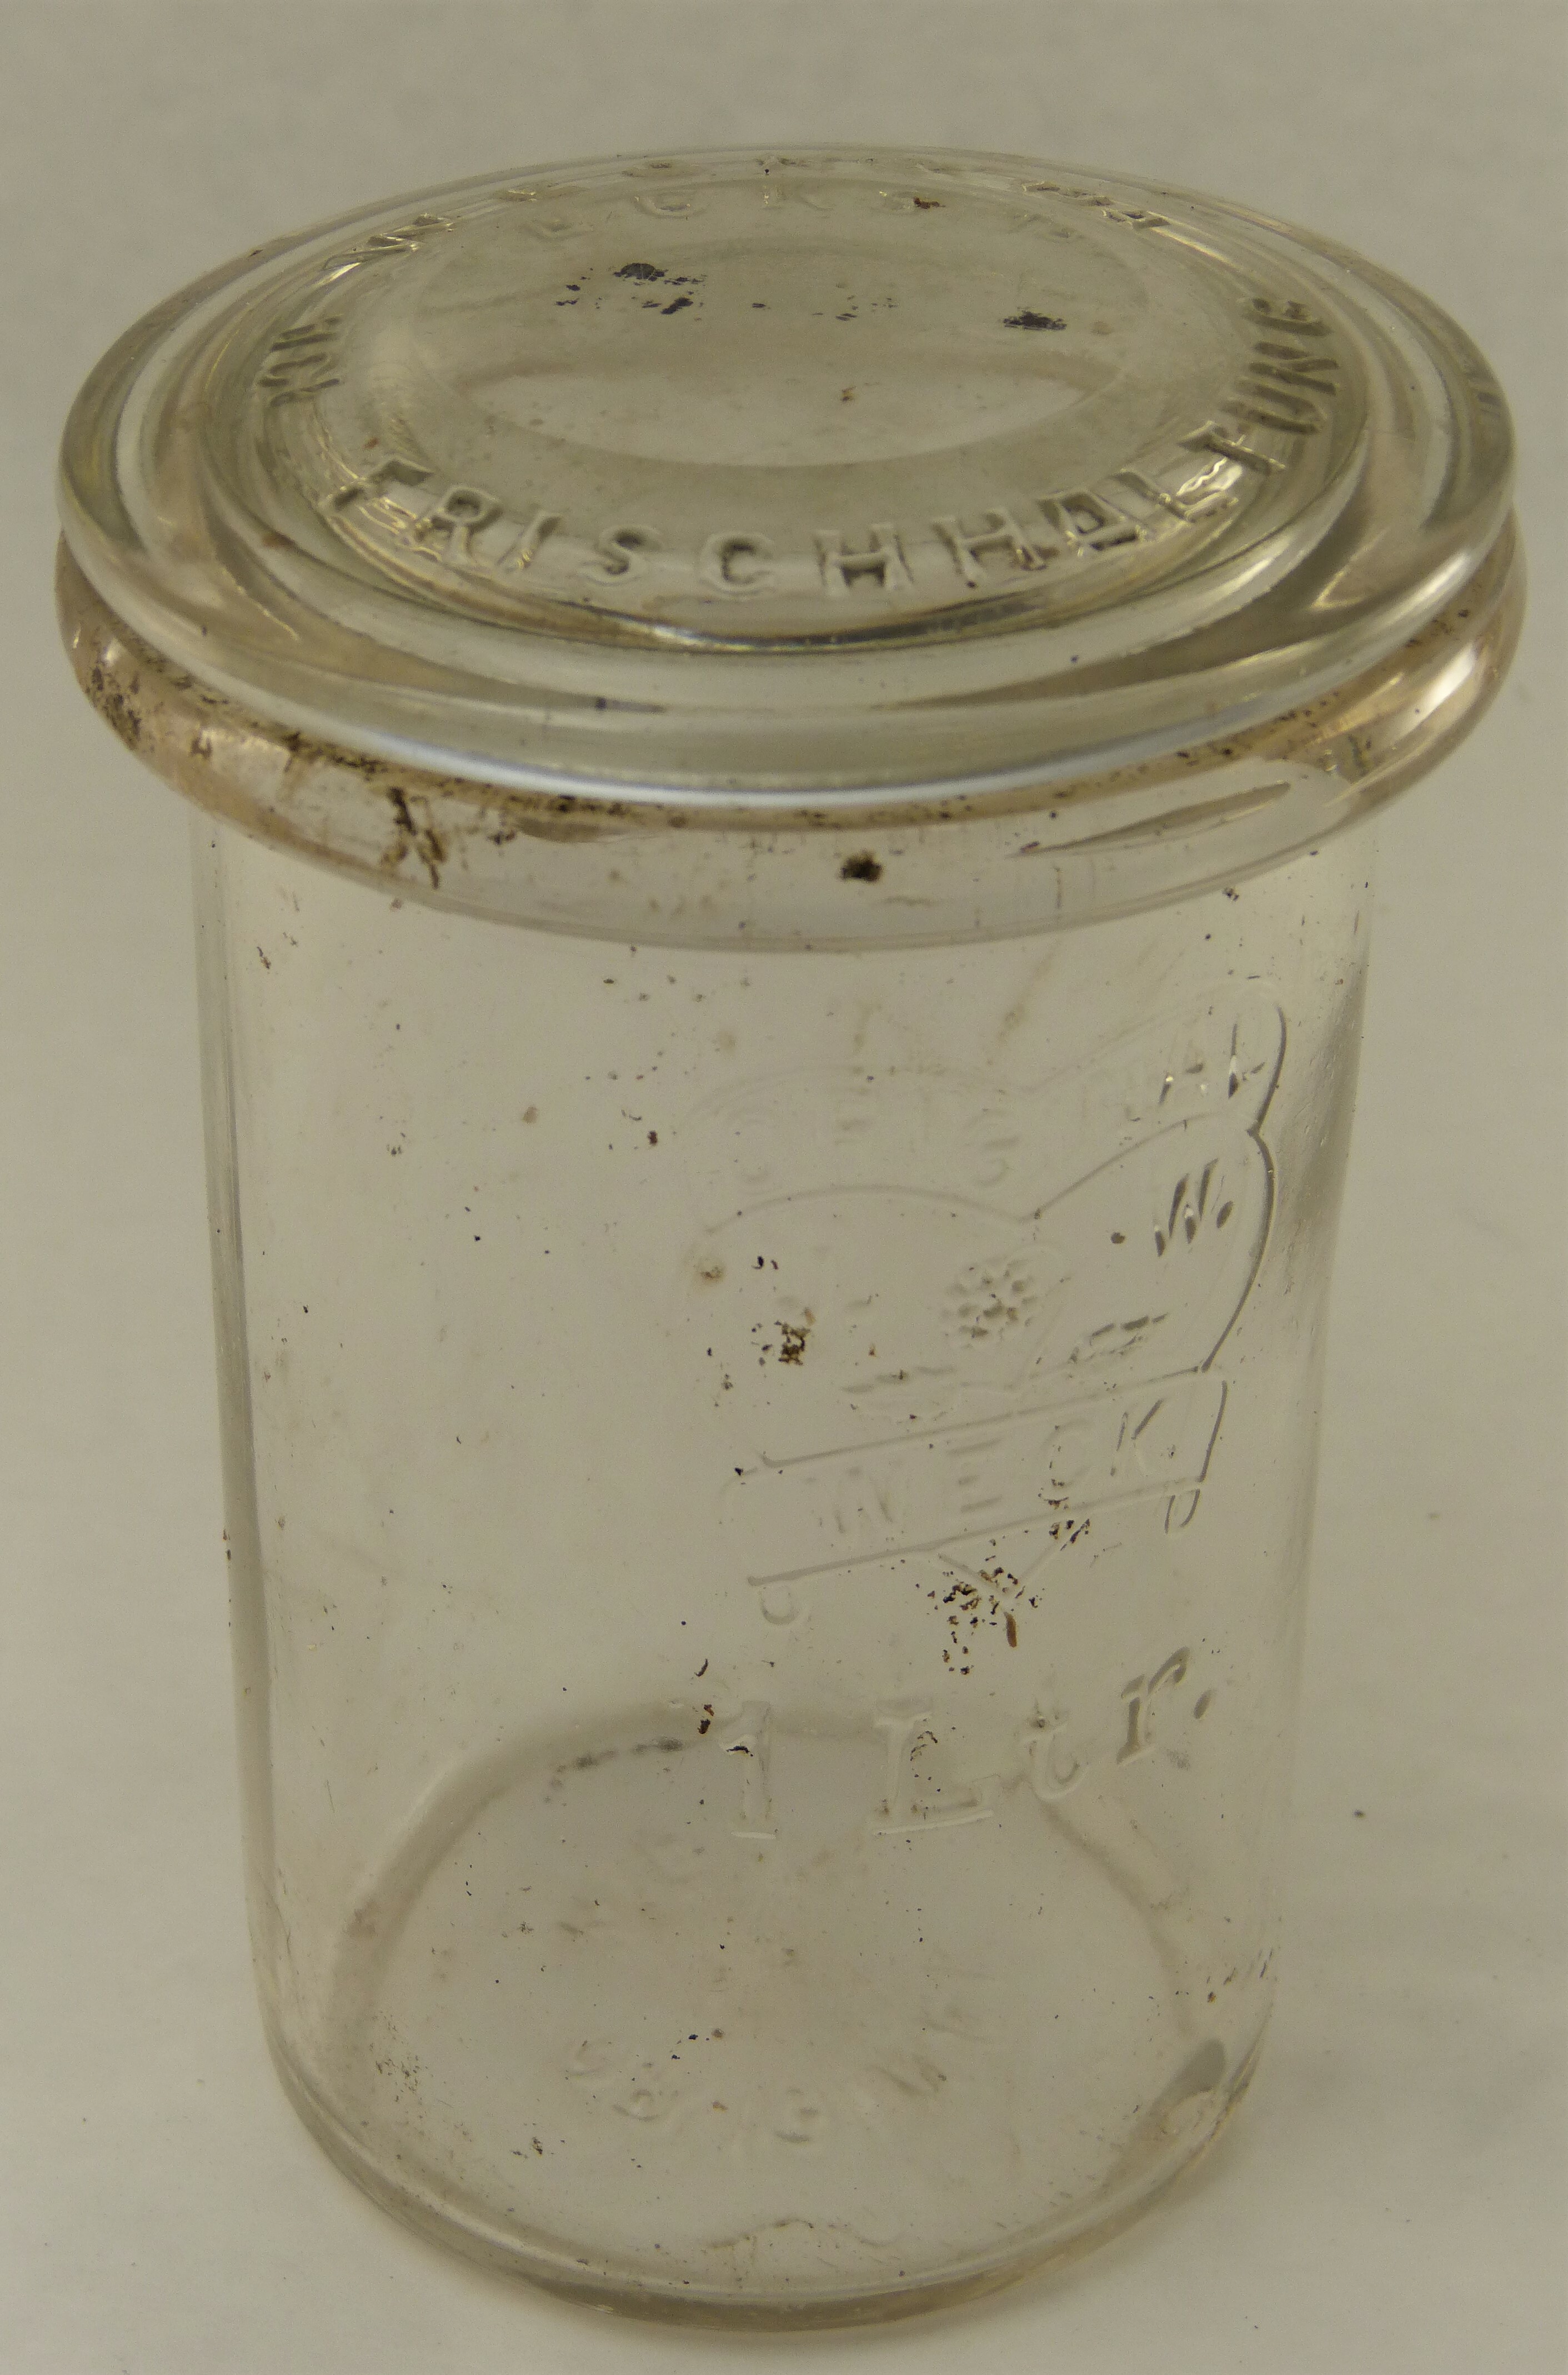 Einmachglas der Firma "Weck" (Städt. Hellweg-Museum Geseke CC BY-NC-SA)